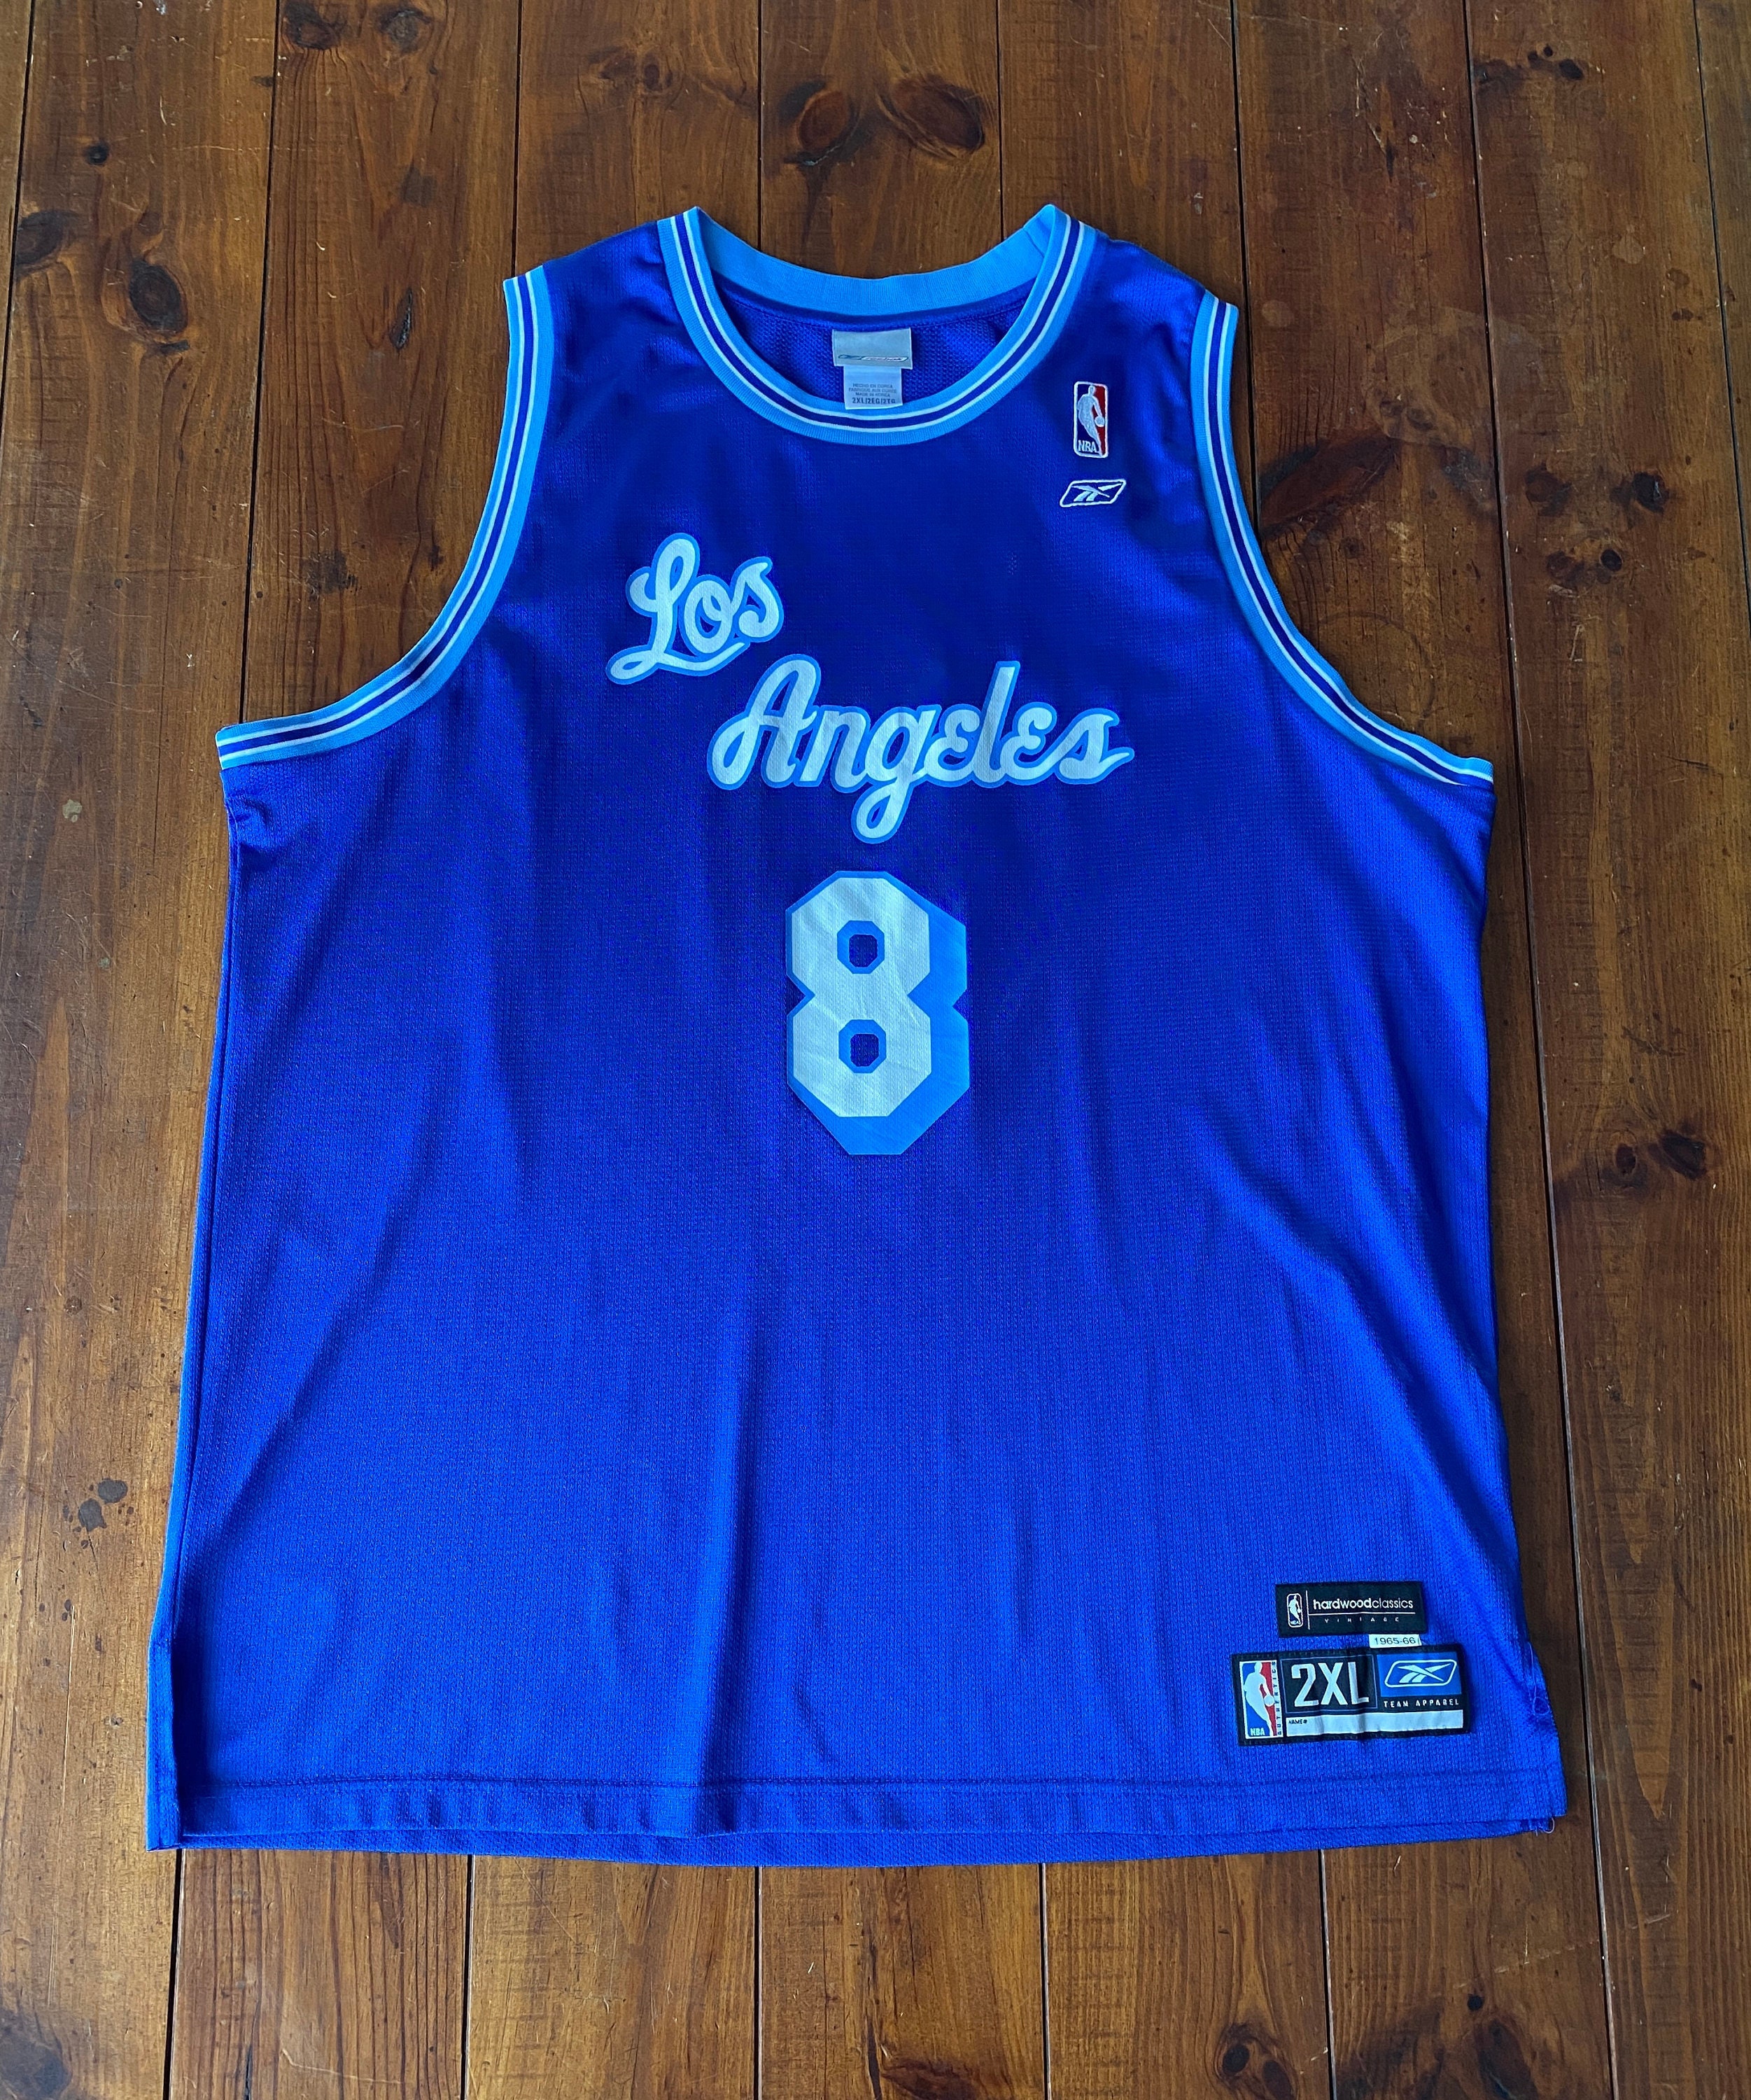 Sports / College Vintage Nike NBA Kobe Bryant #8 Jersey Size Large